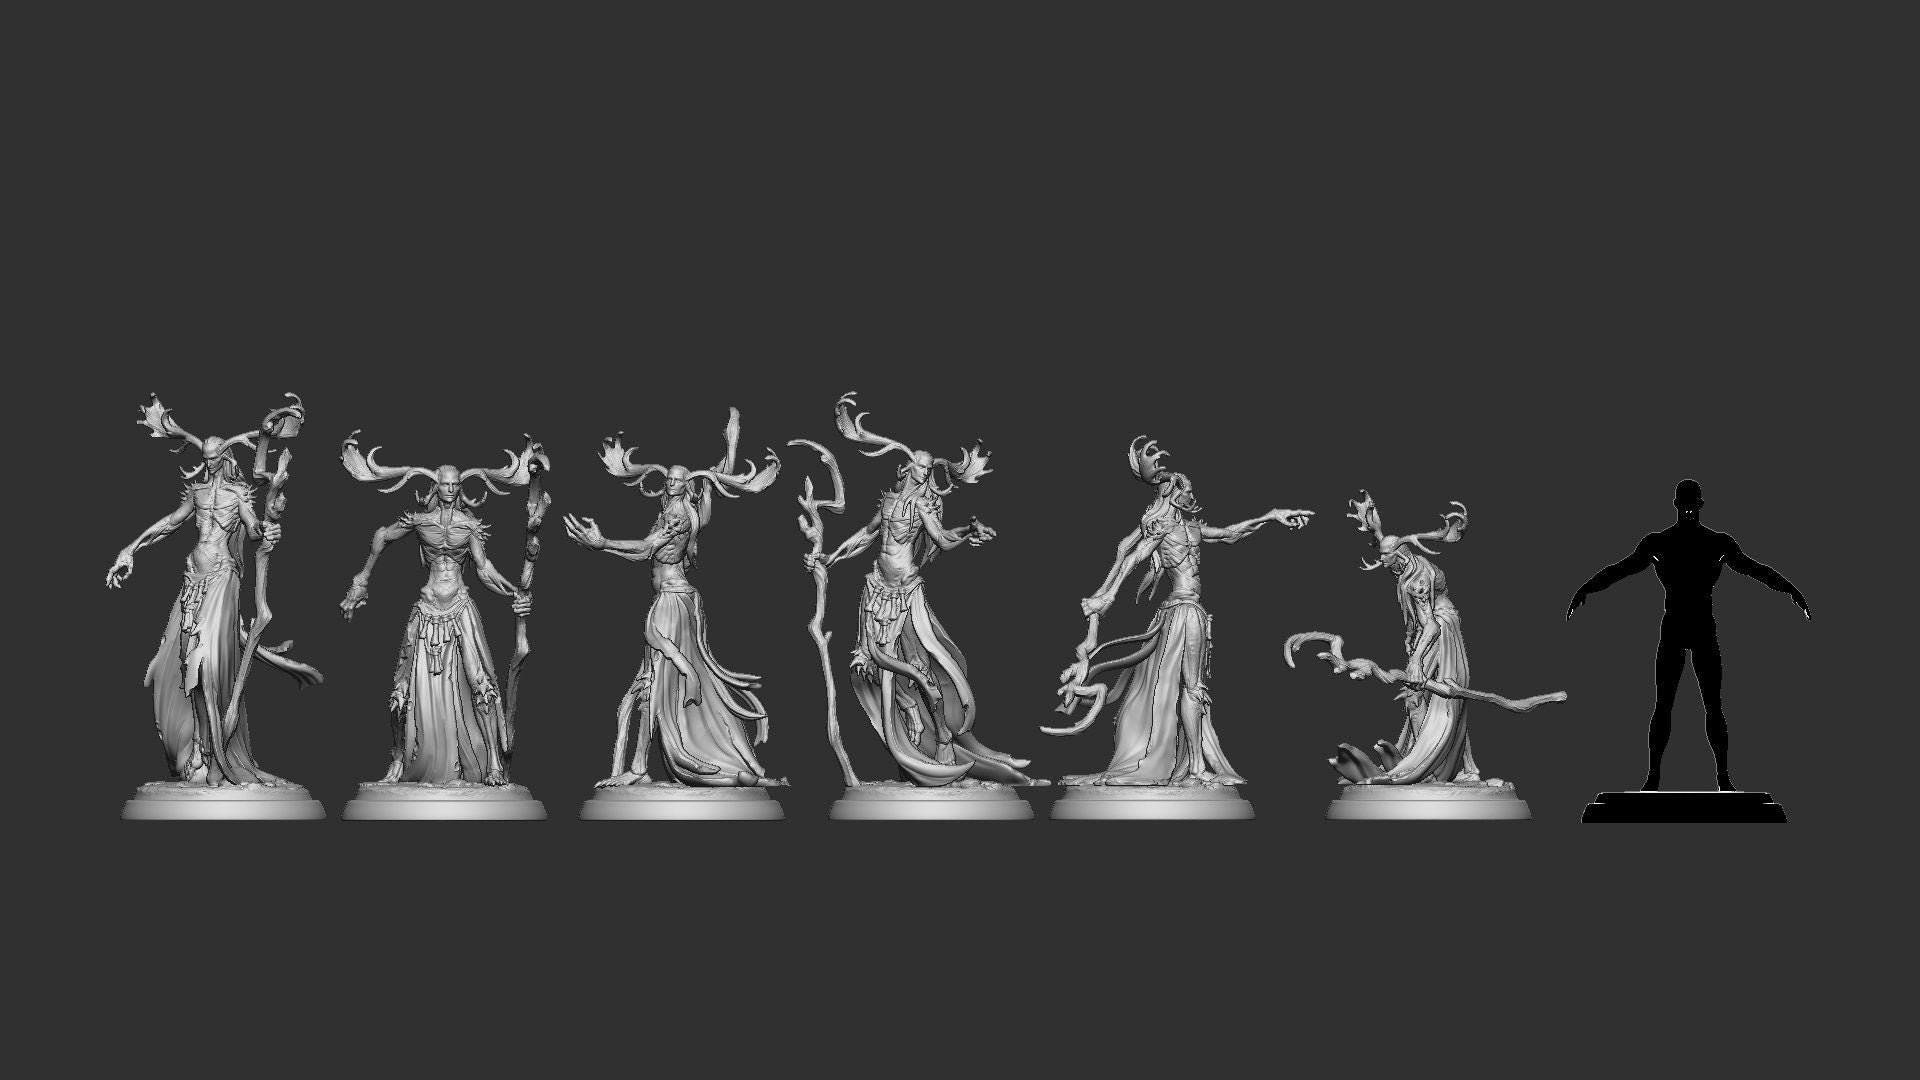 Dark Creatures Set | Six Poses | Order Of The Grave Whisper | Resin 3D Printed Miniature | White Werewolf Tavern